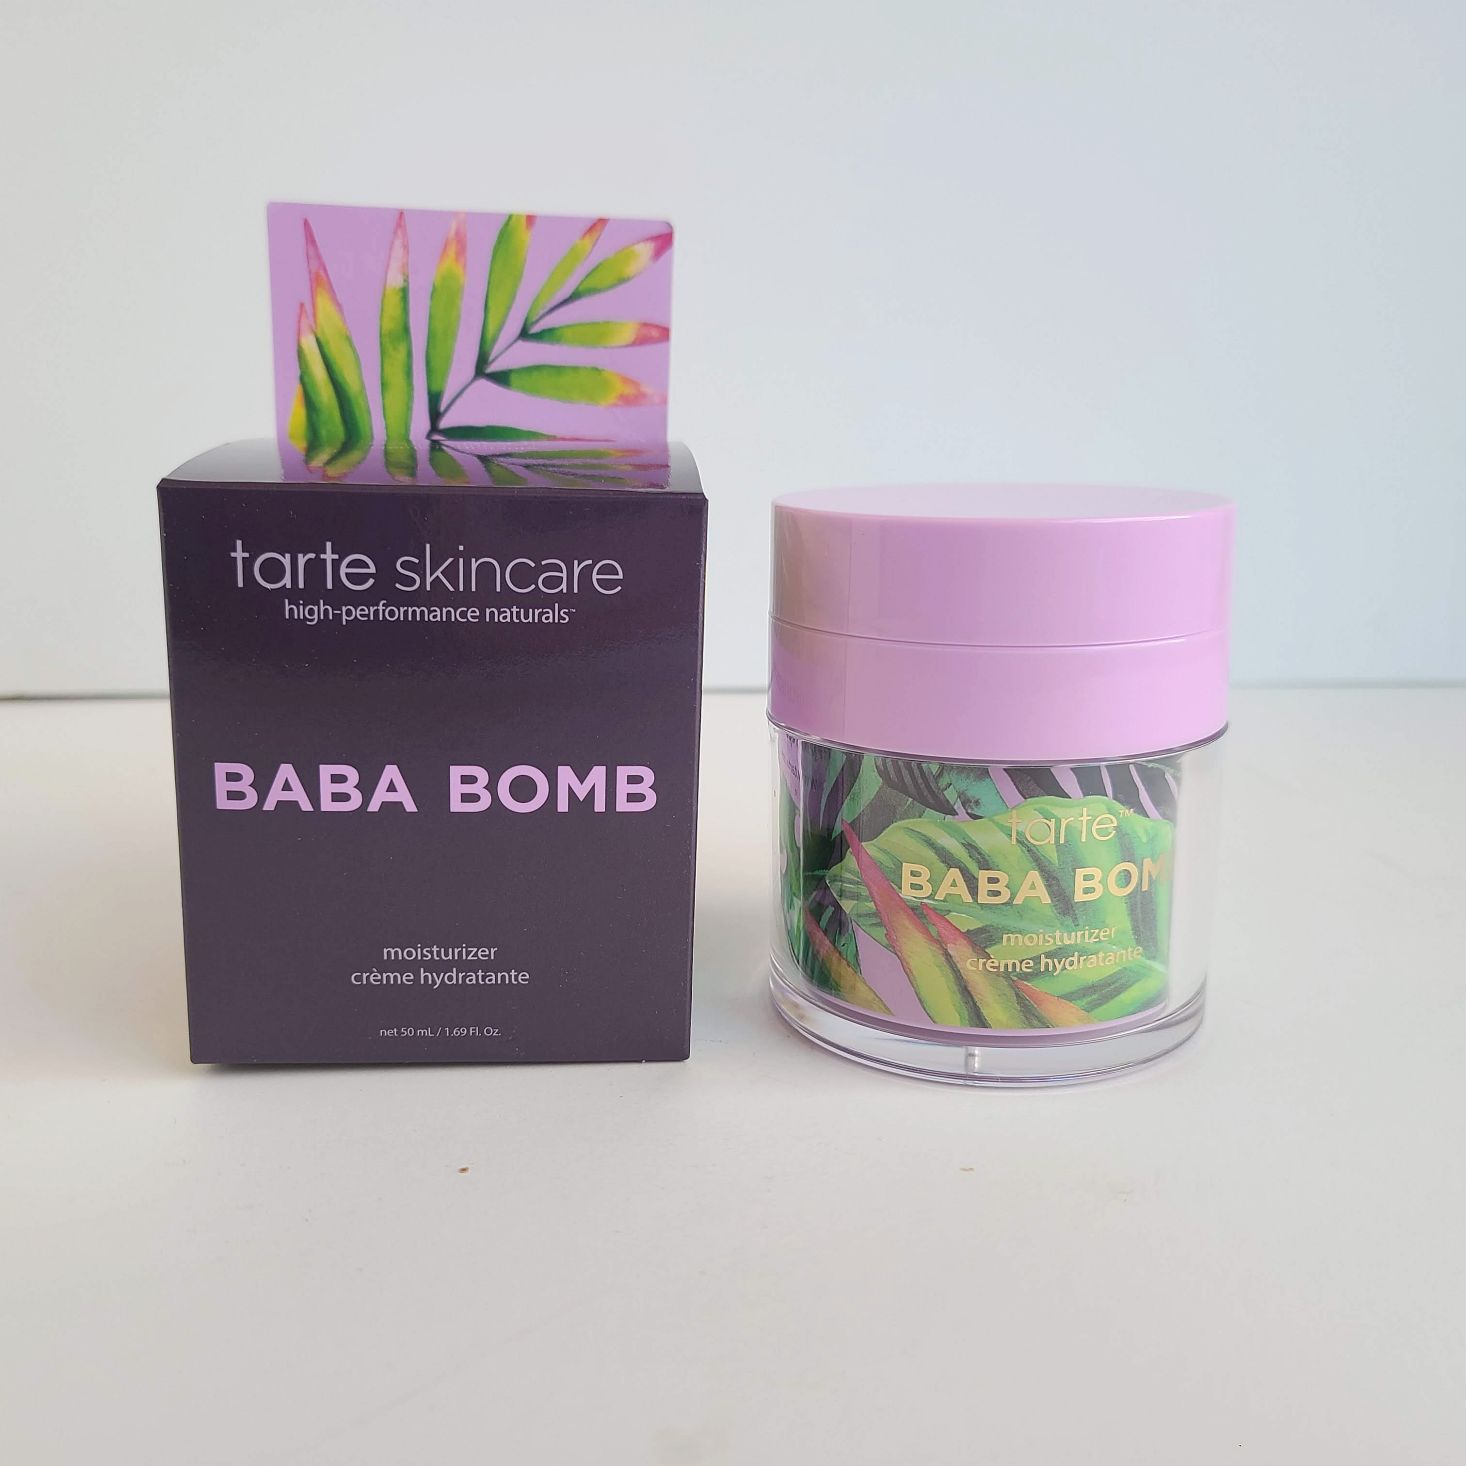 Tarte Create Your Own Kit October 2020 moisturizer